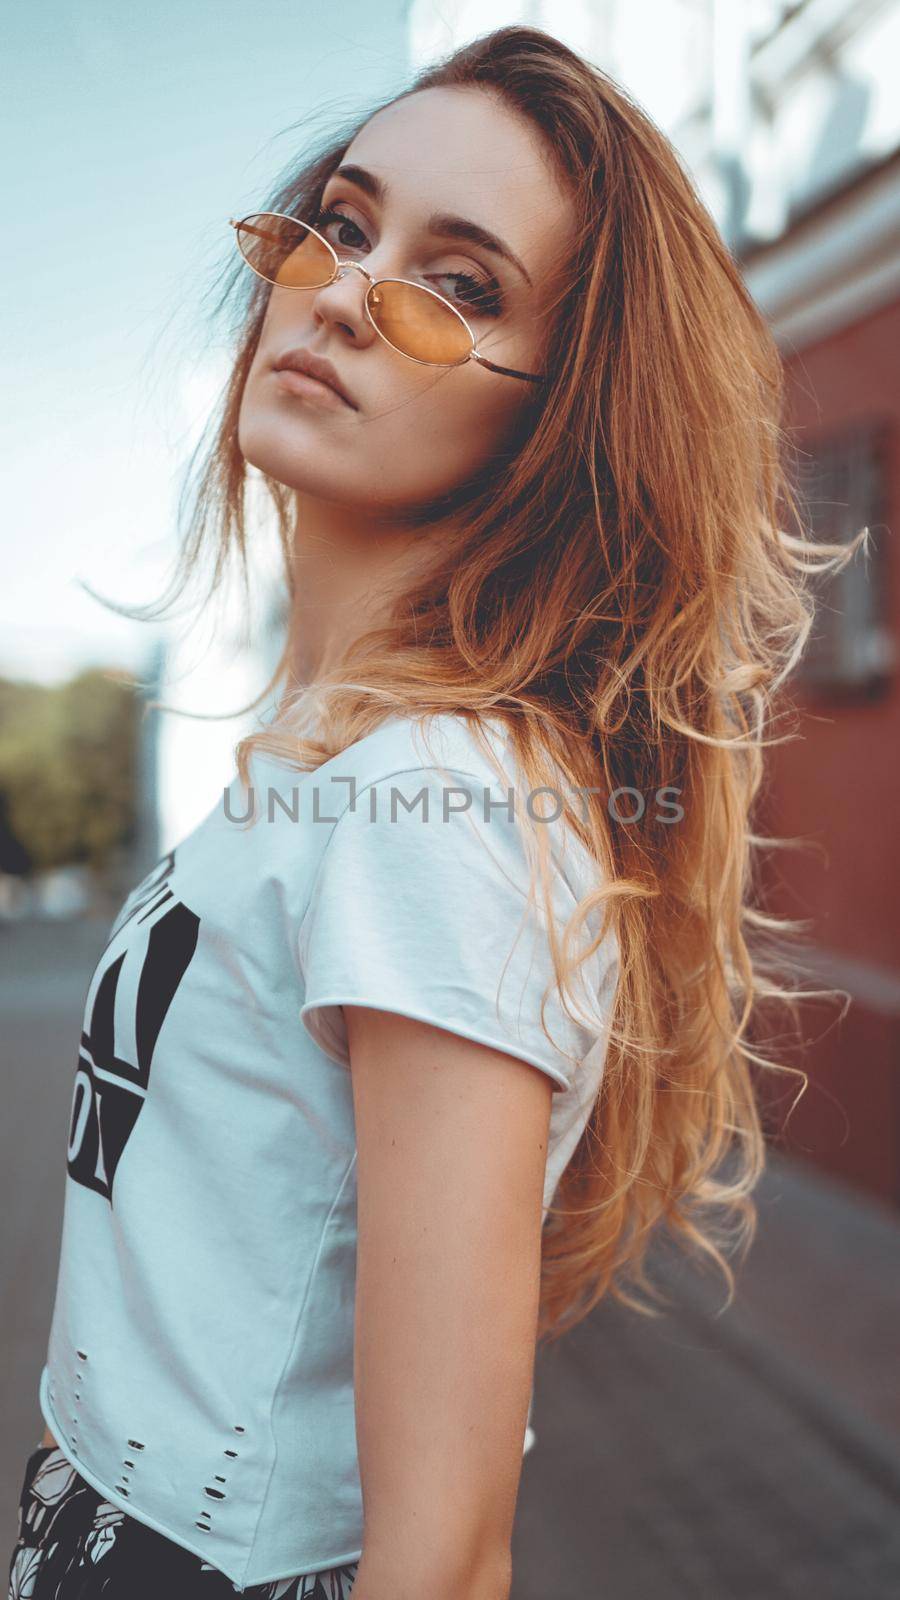 Fashion portrait stylish pretty woman in sunglasses posing in the city, street fashion